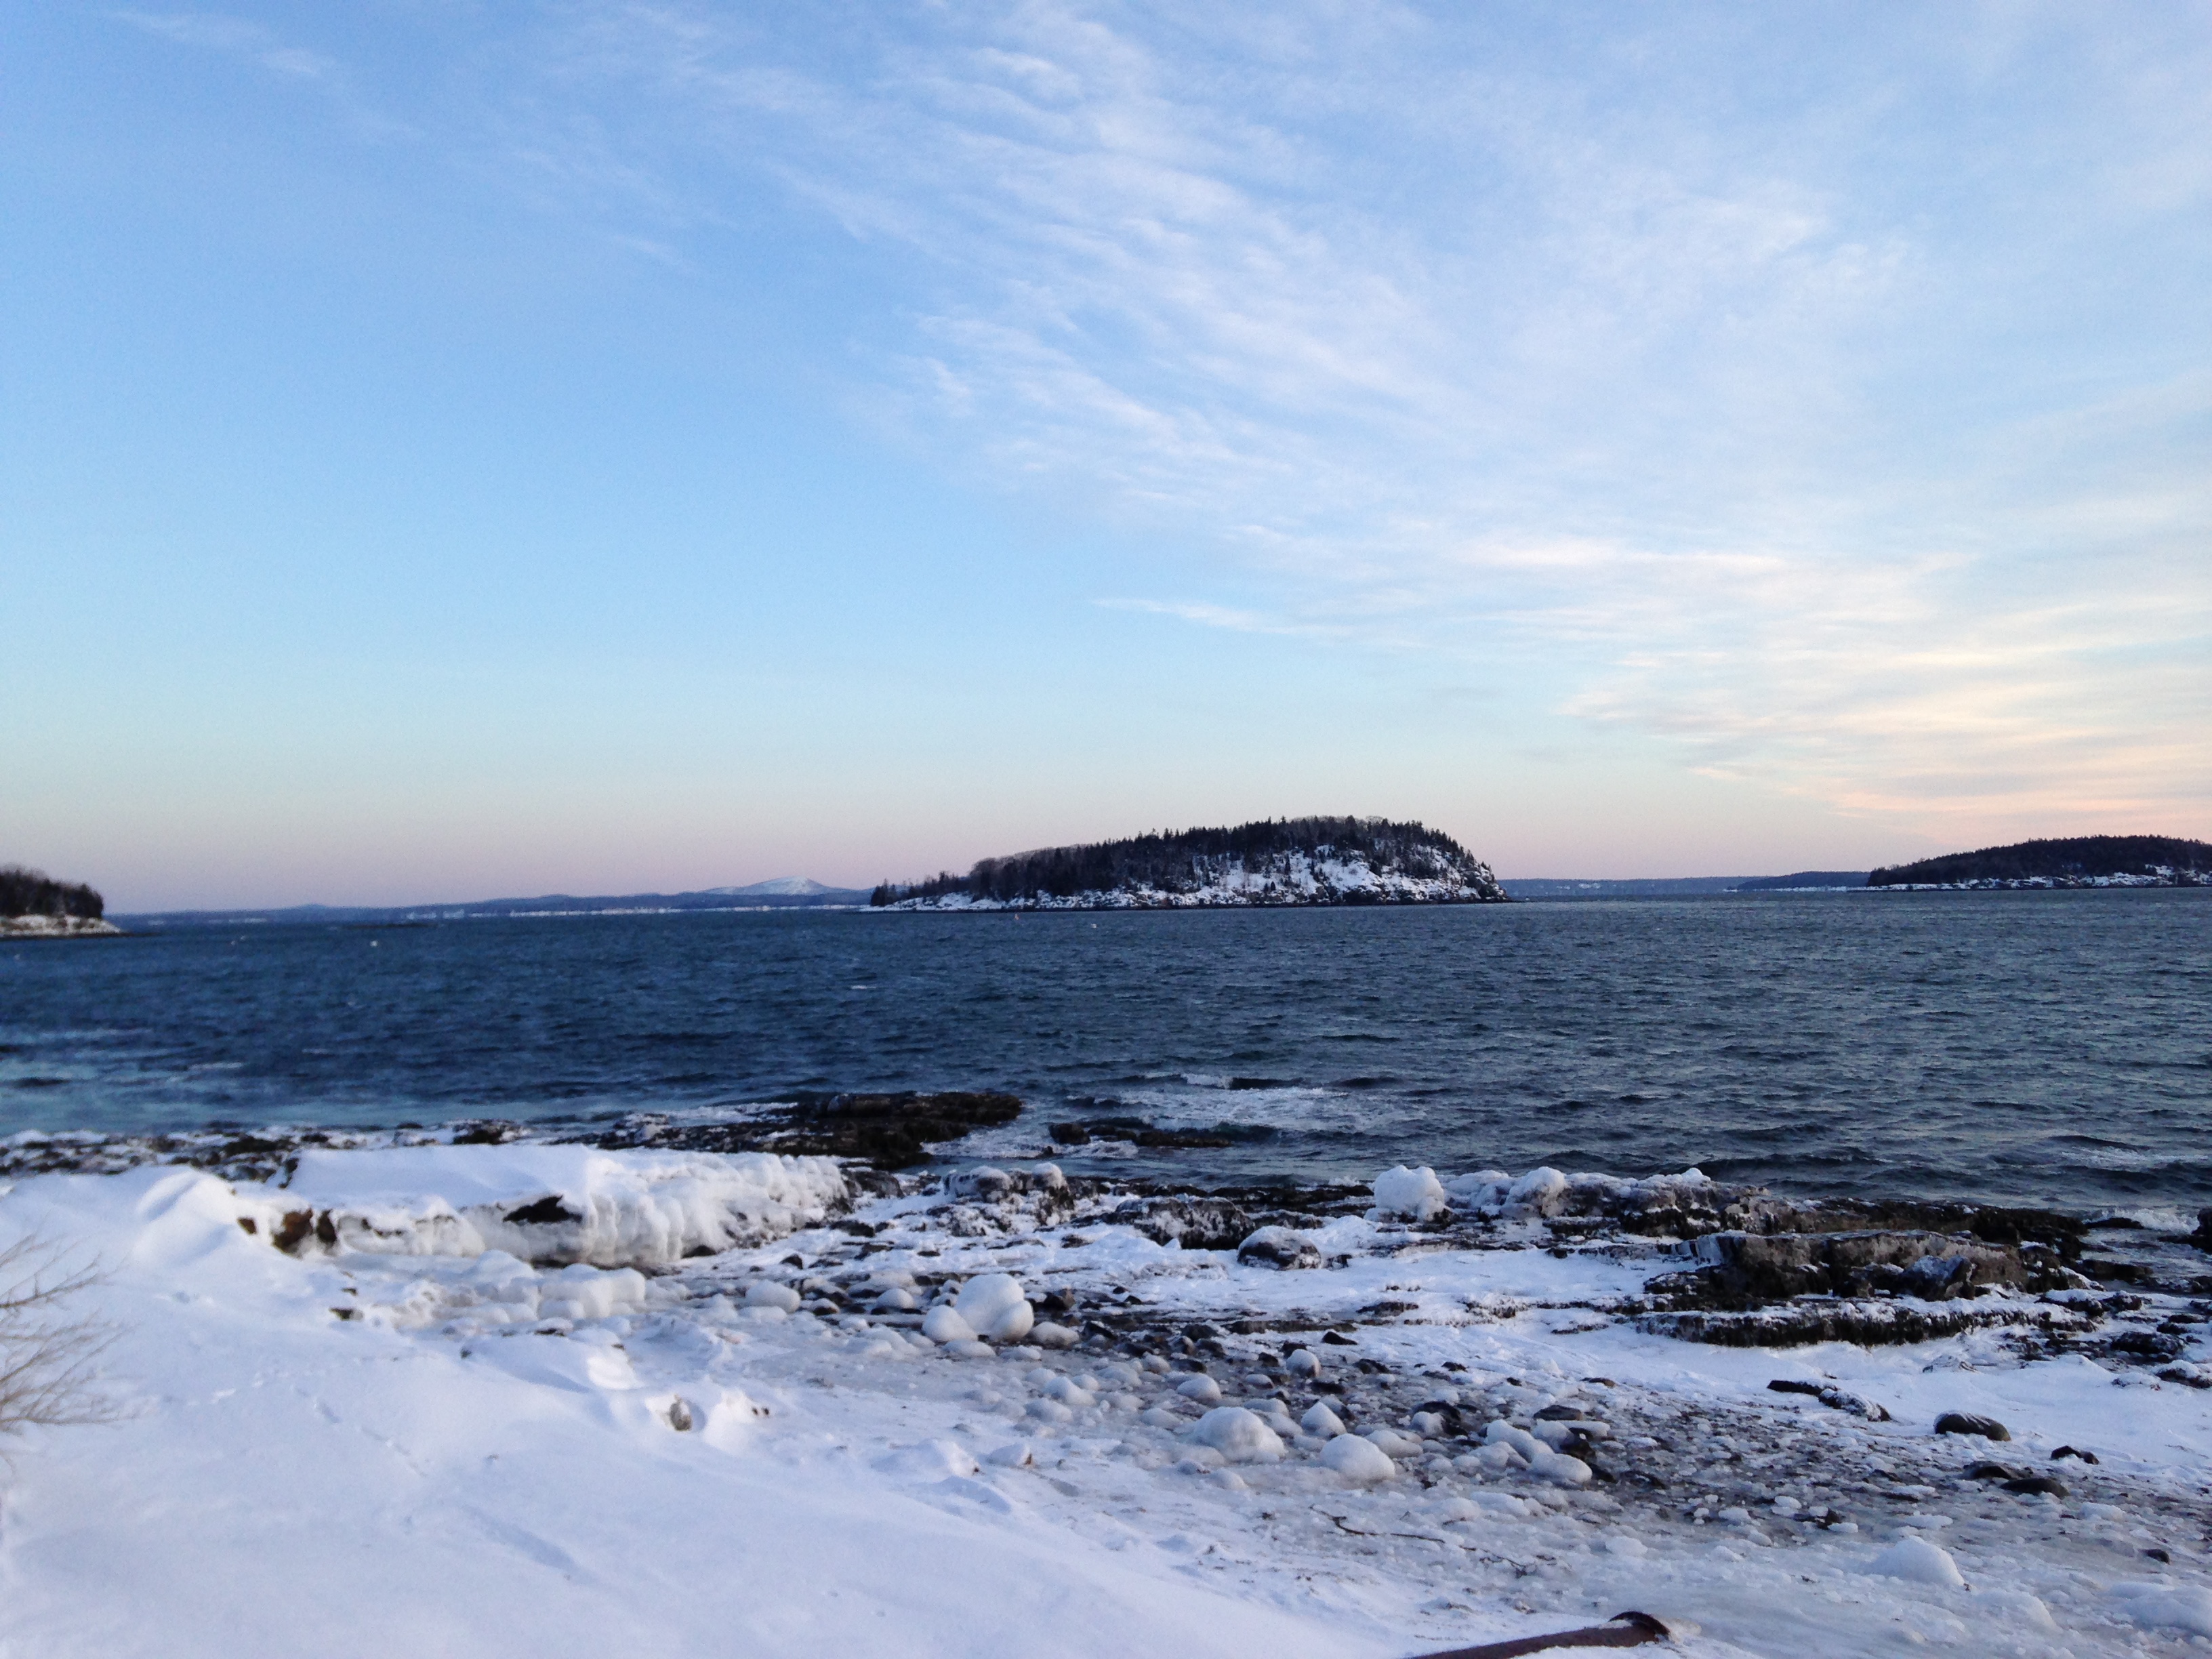 Plan a Winter Getaway to Bar Harbor and Acadia National Park